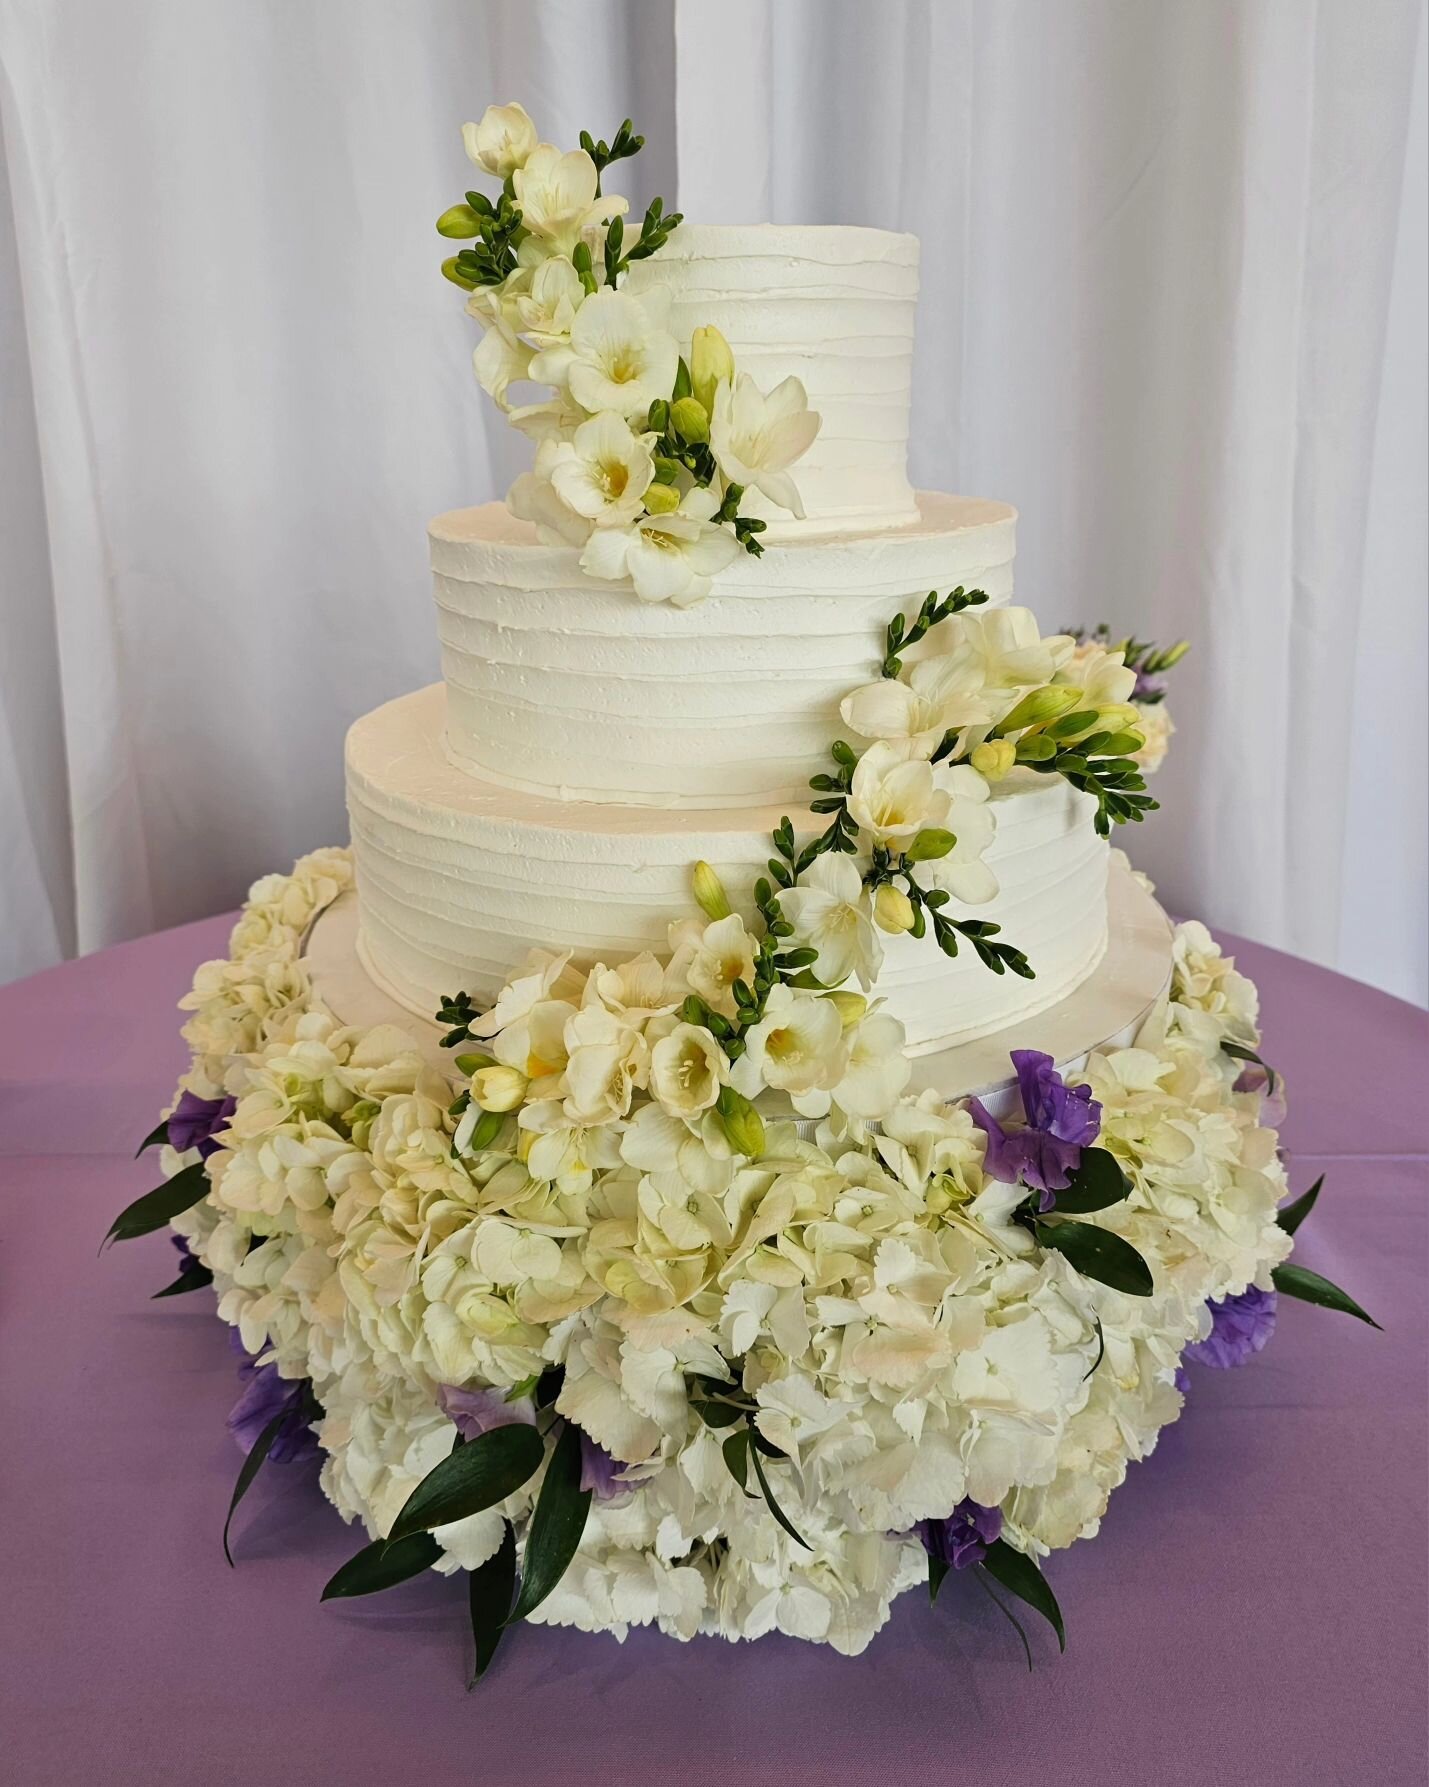 Stunning floral on this elegant cake! Congratulations to the happy couple!

#elenascakesdallas 
#dallasweddingplanning 
#dallasweddingcakes 
#dallasbakery 
#elegantweddingcake